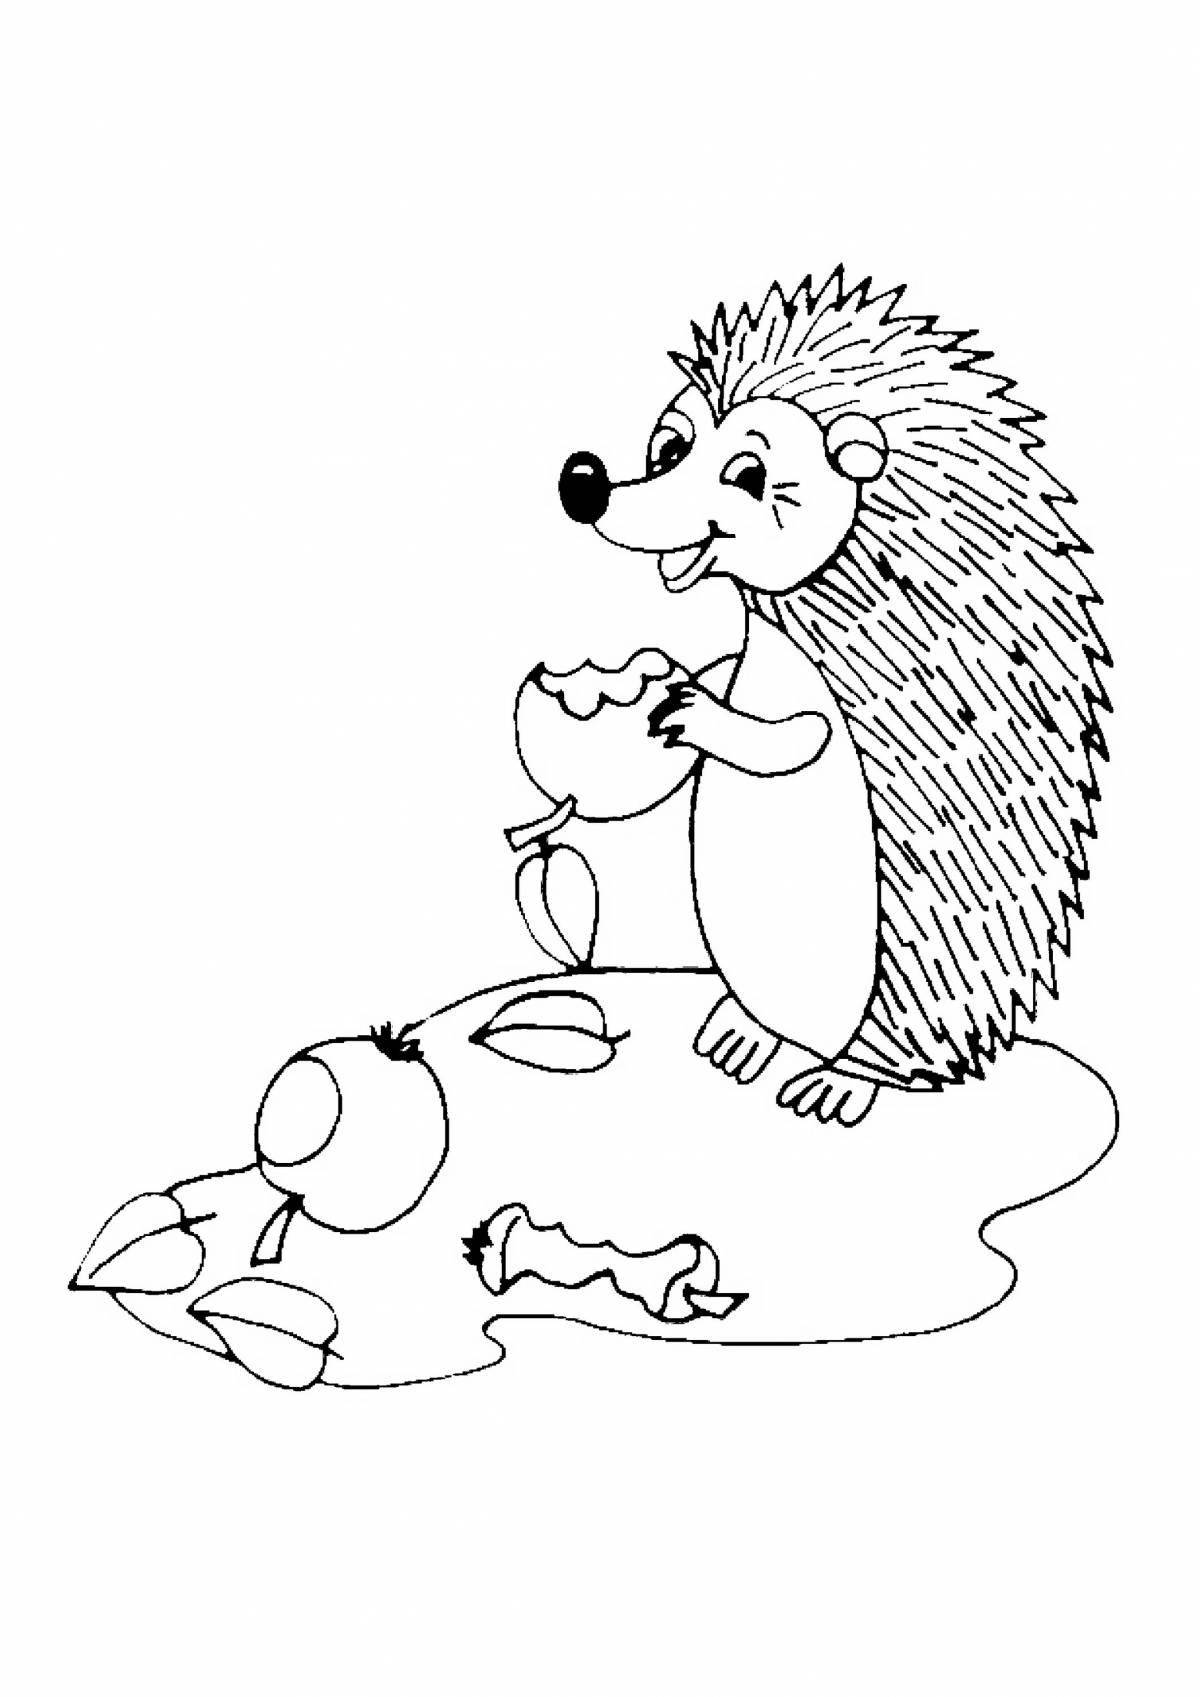 Colorful hedgehog drawing